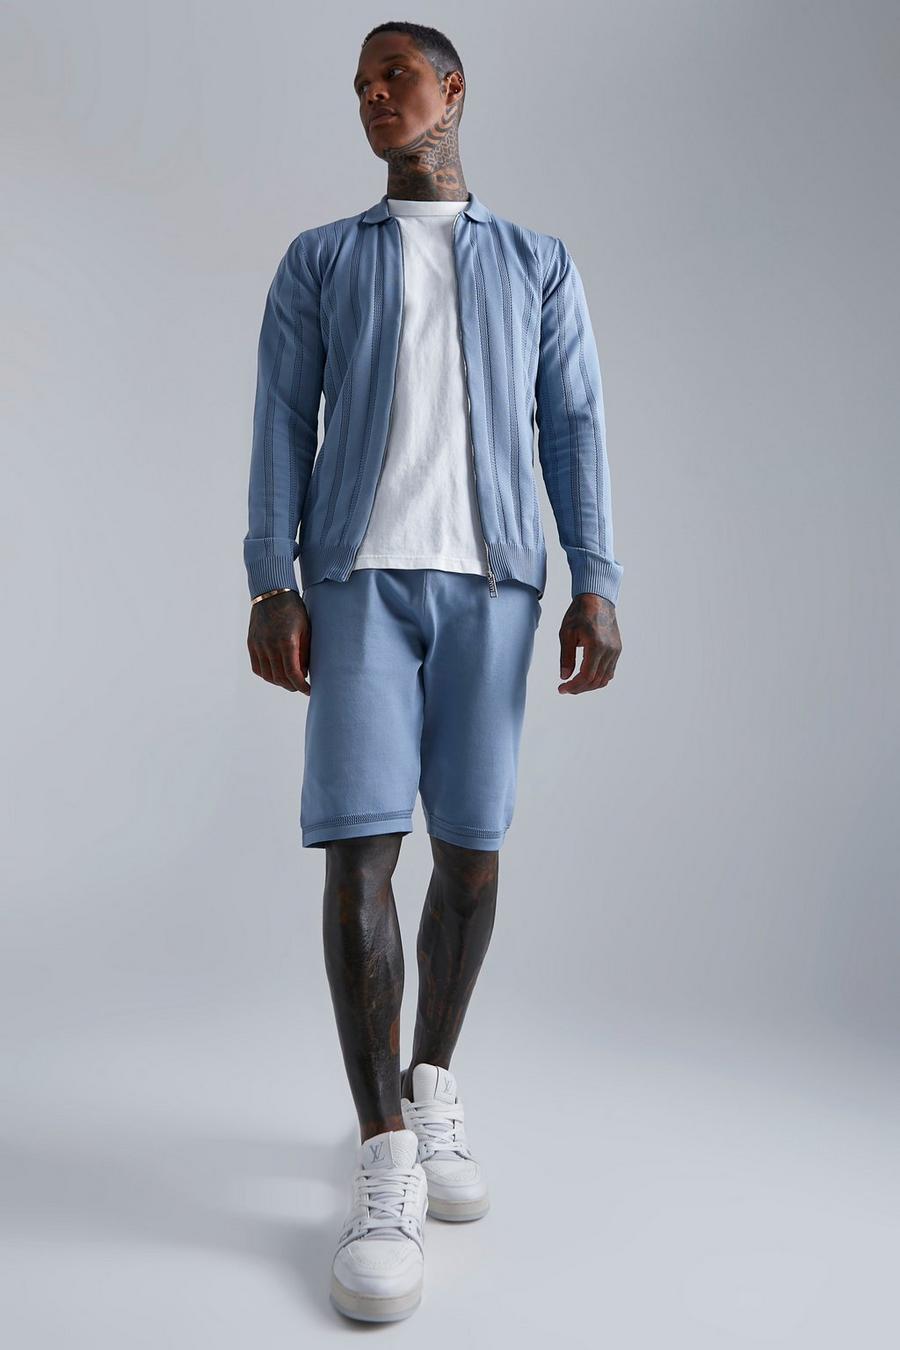 Harrington-Jacke mit offener Naht und Shorts, Dusty blue